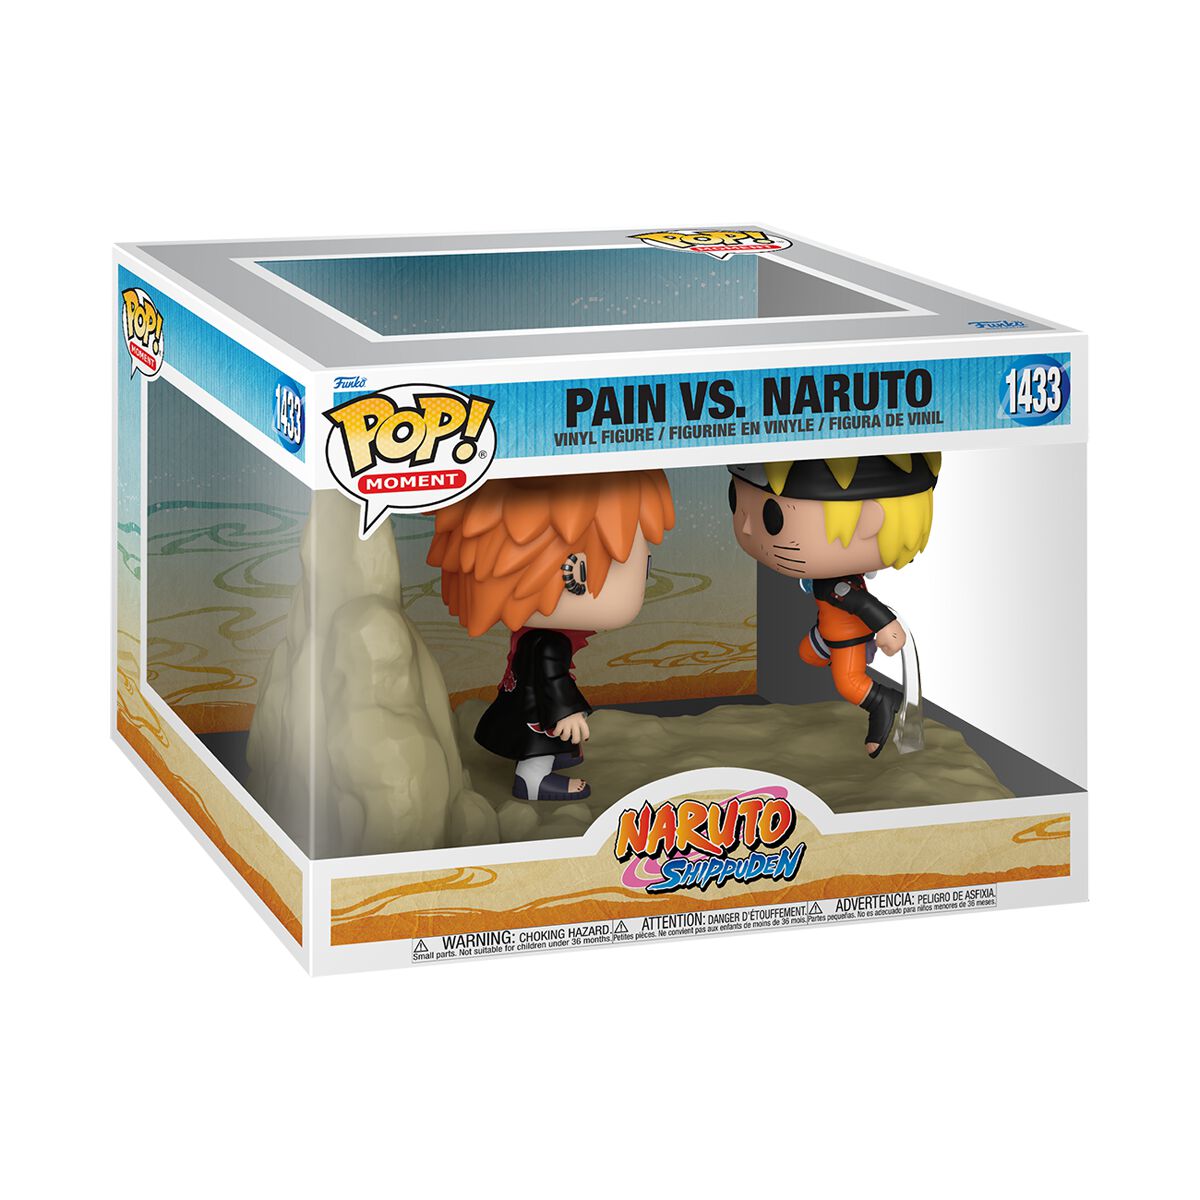 Pain vs. Naruto (Pop! Moment) vinylfigur nr 1433